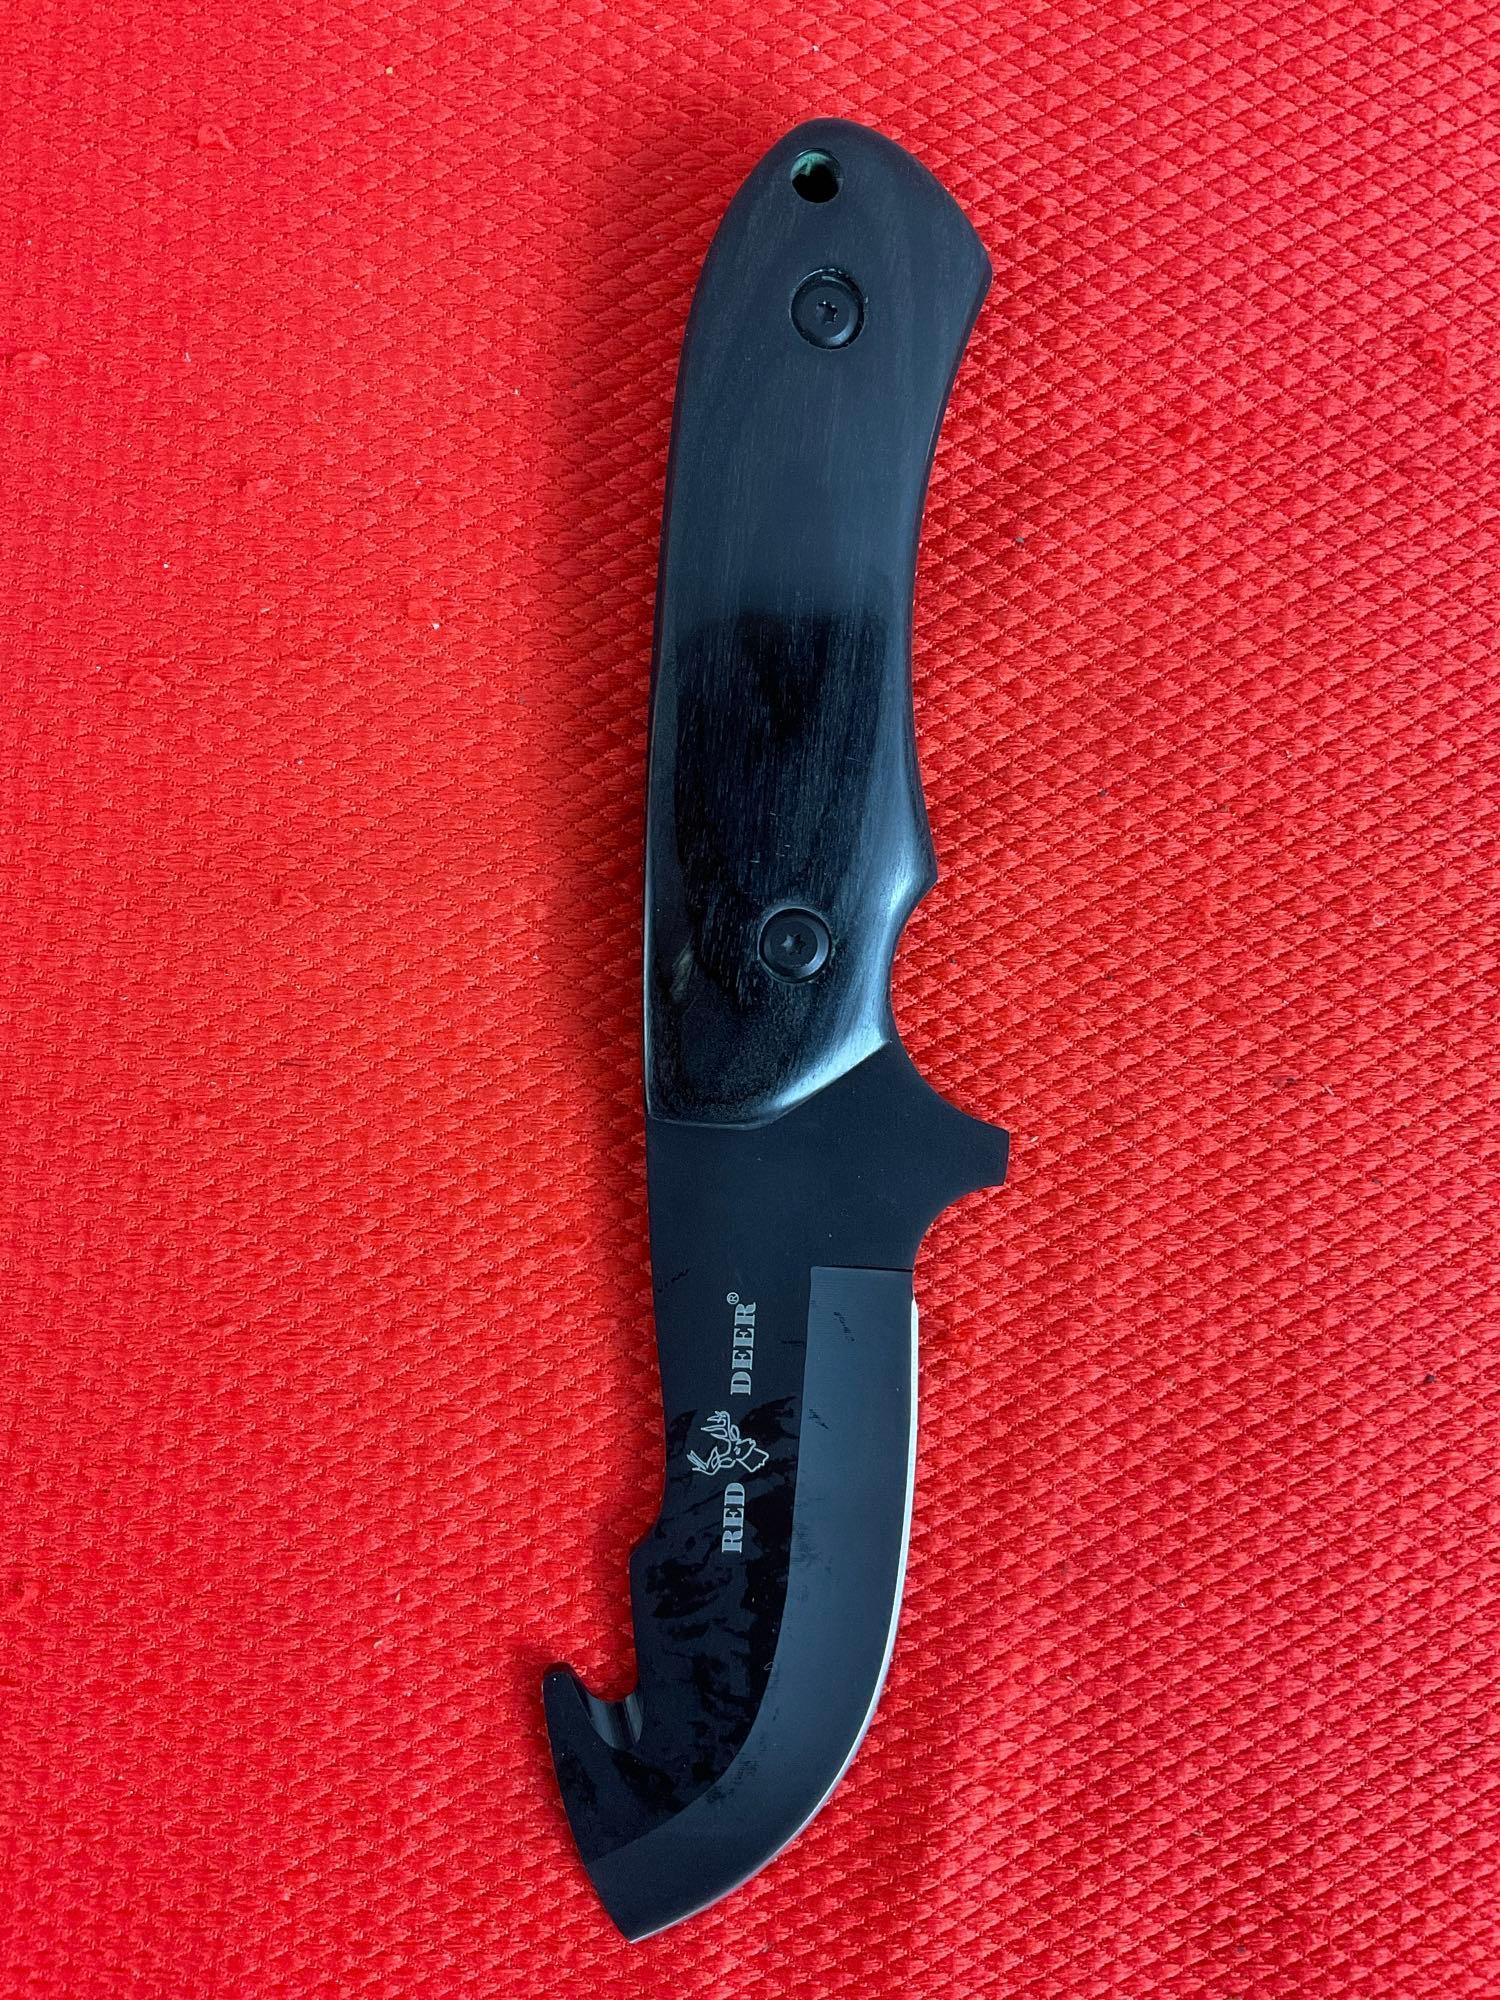 Red Deer 4" 1045 German Steel Fixed Blade Hunting Knife w/ Guthook. Model RDX-9700-B. NIB. See pi...